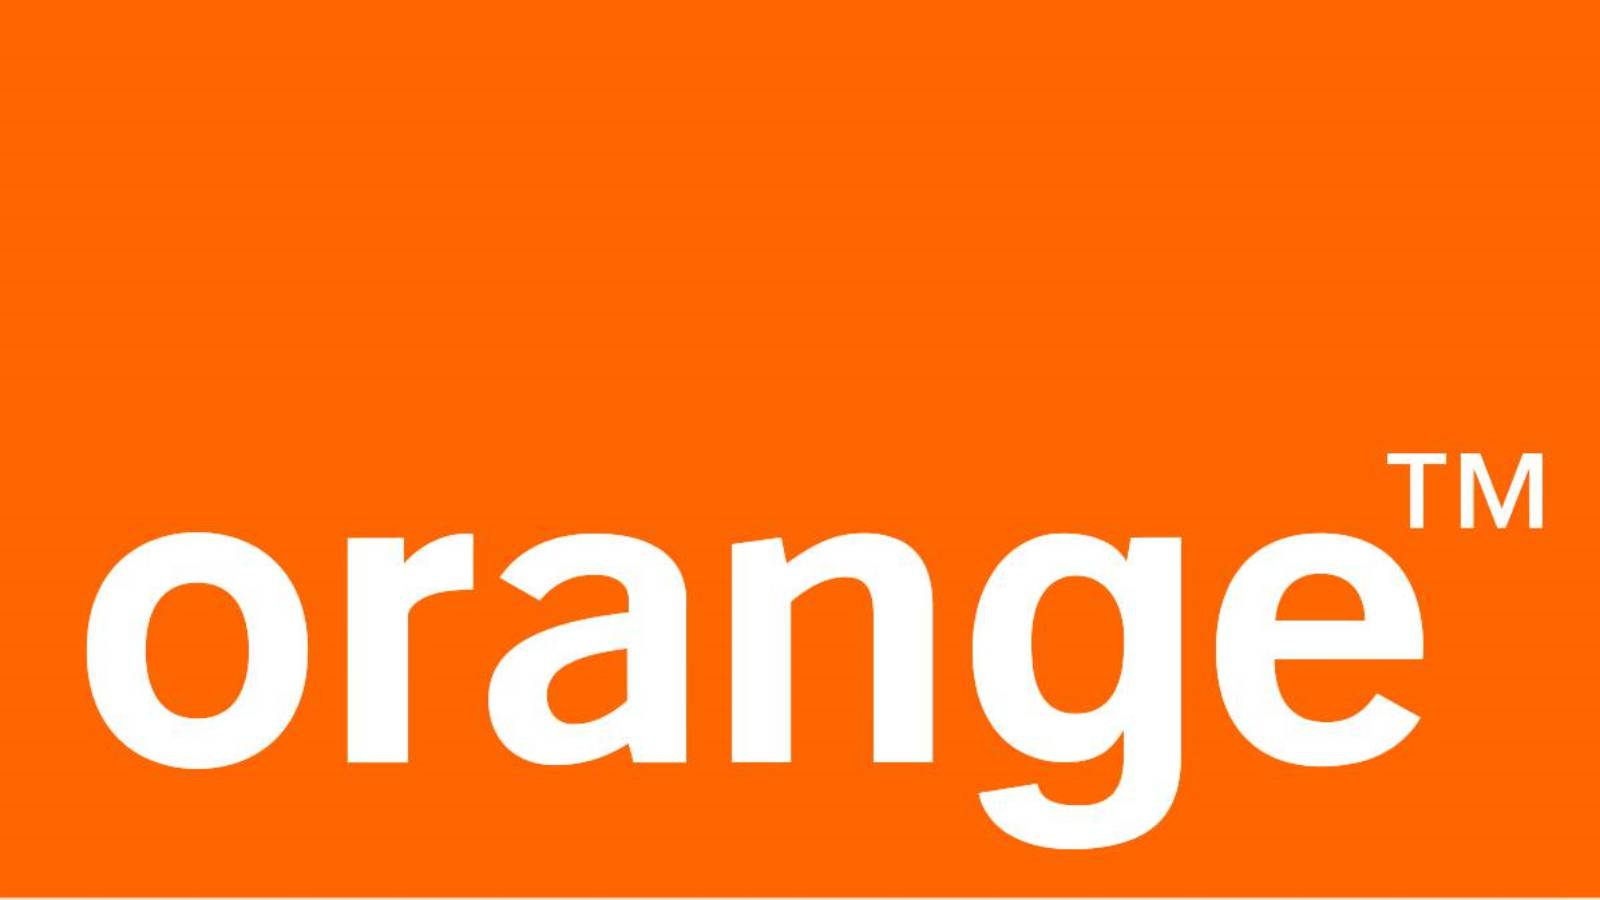 Orange reduceri BLACK FRIDAY